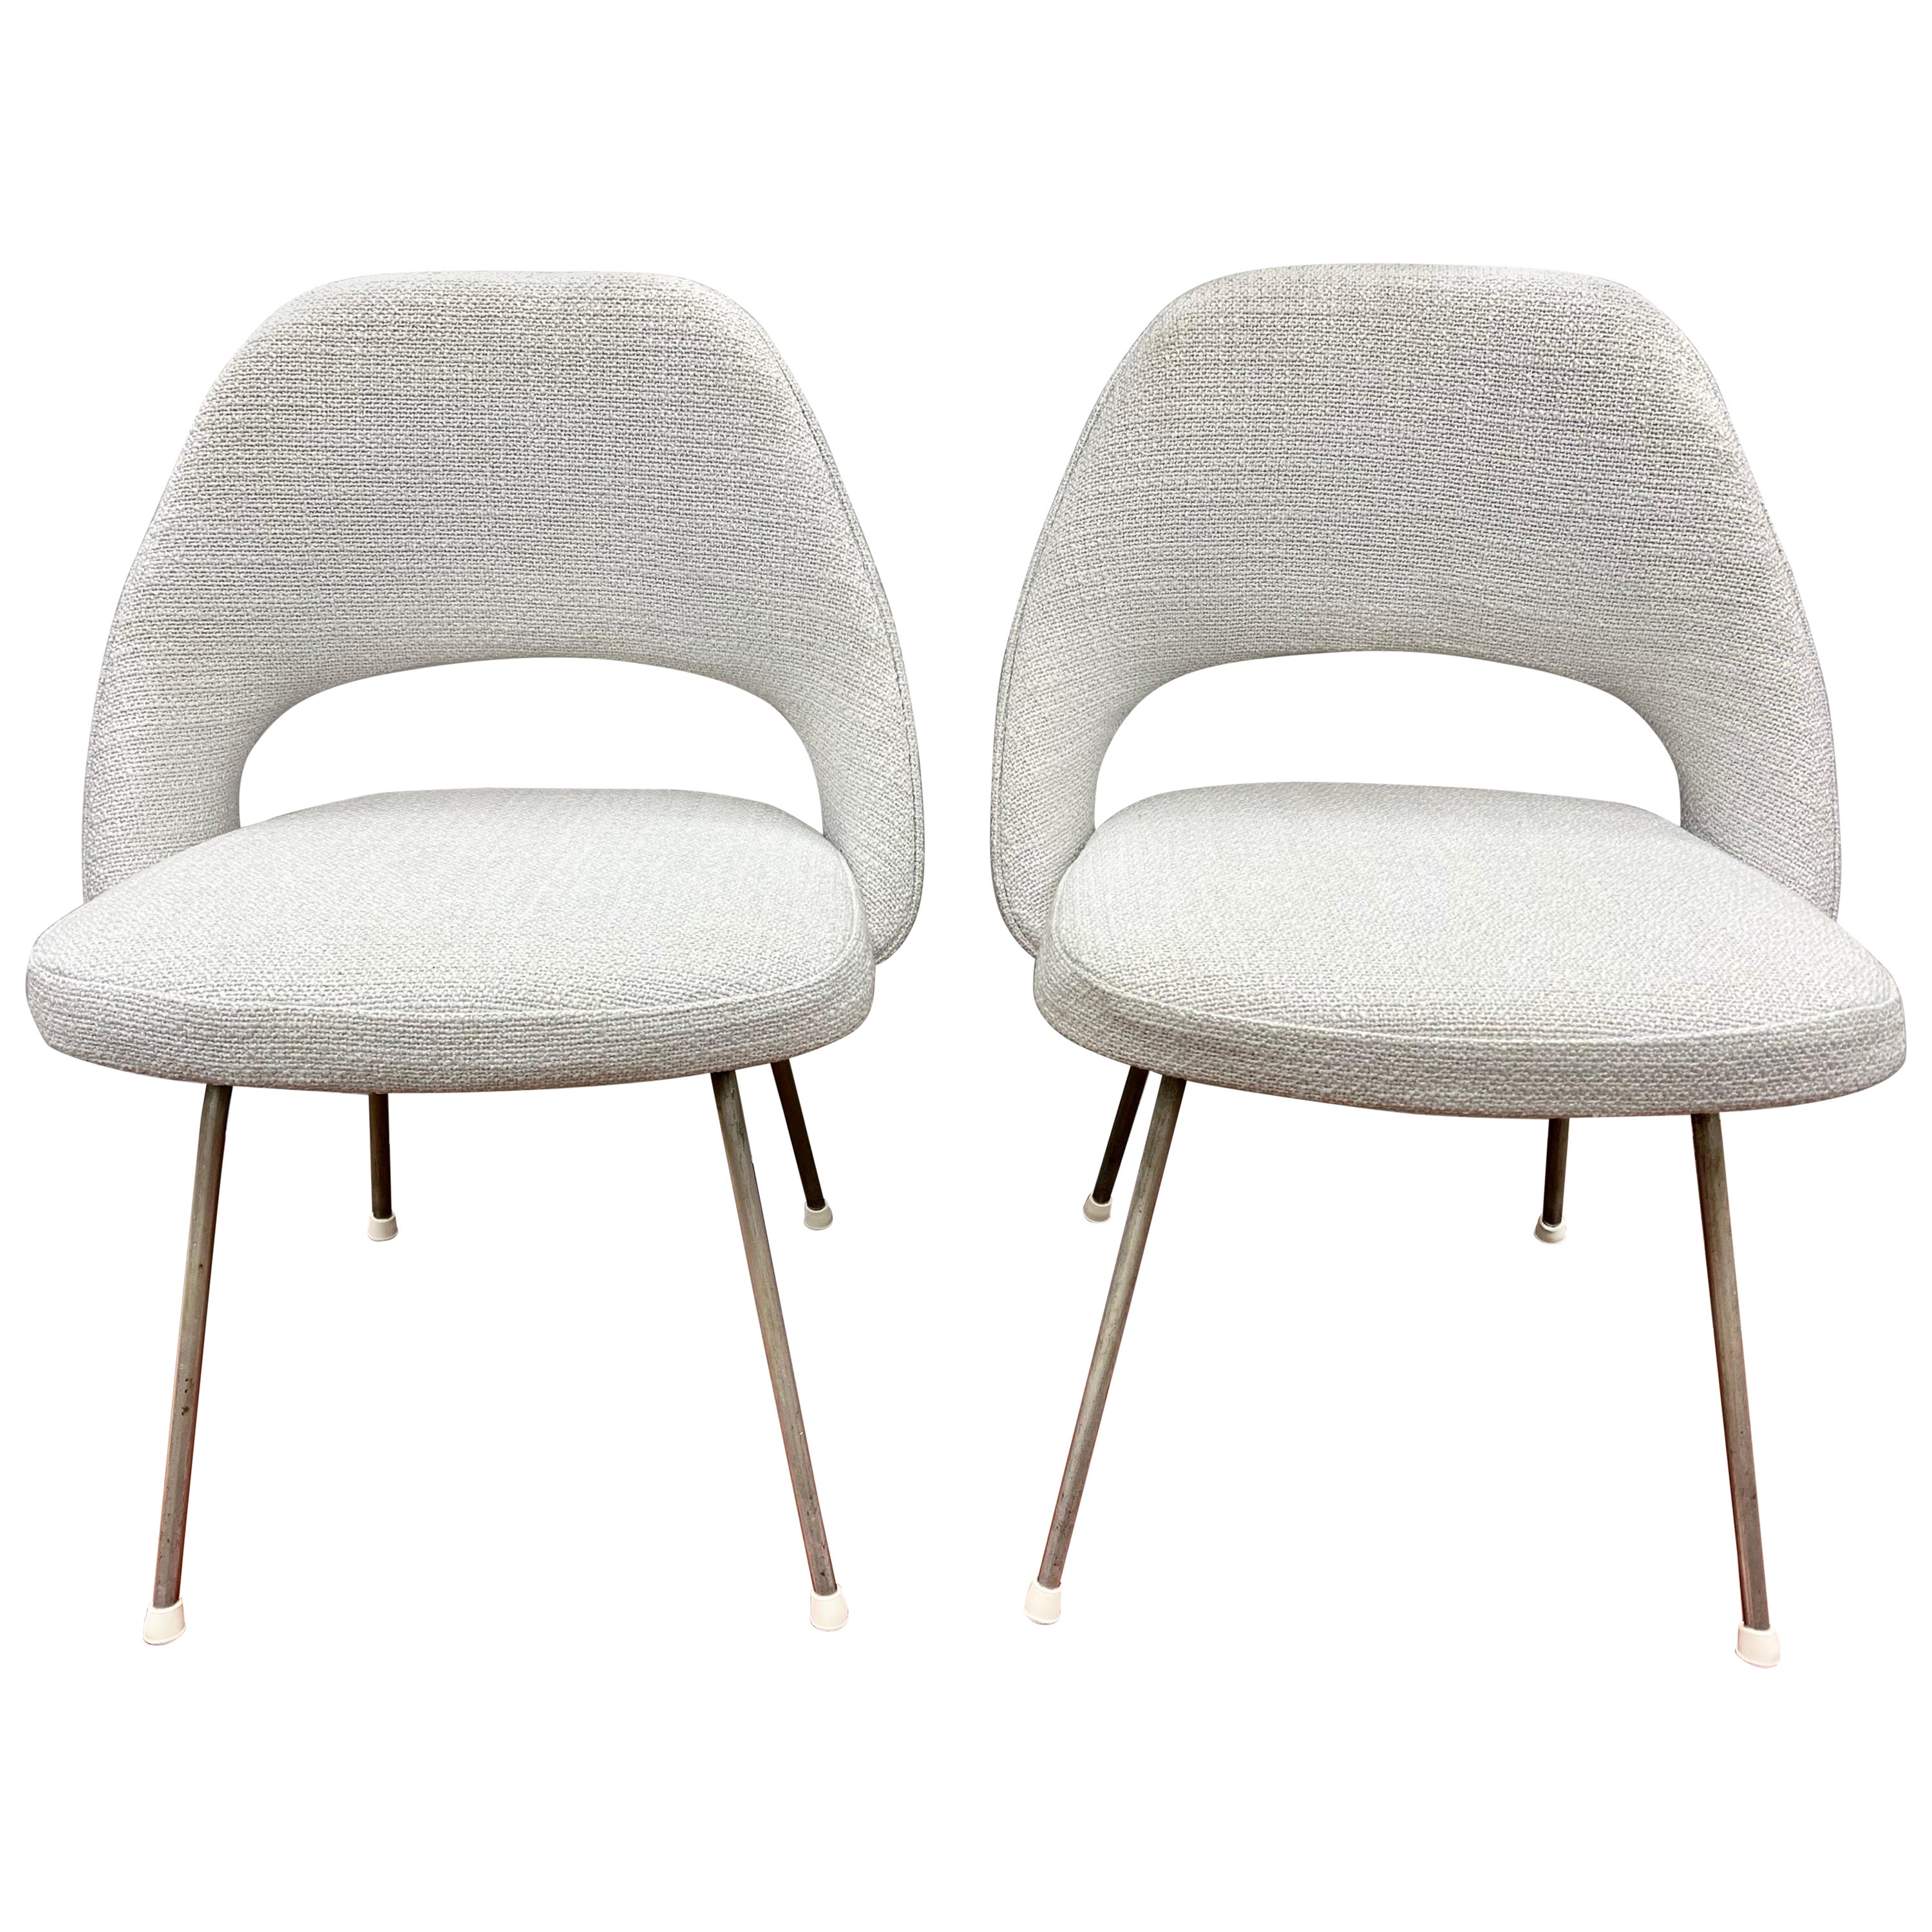 Pair of Mid Century Saarinen Upholstered Chairs with Steel Tubular Legs